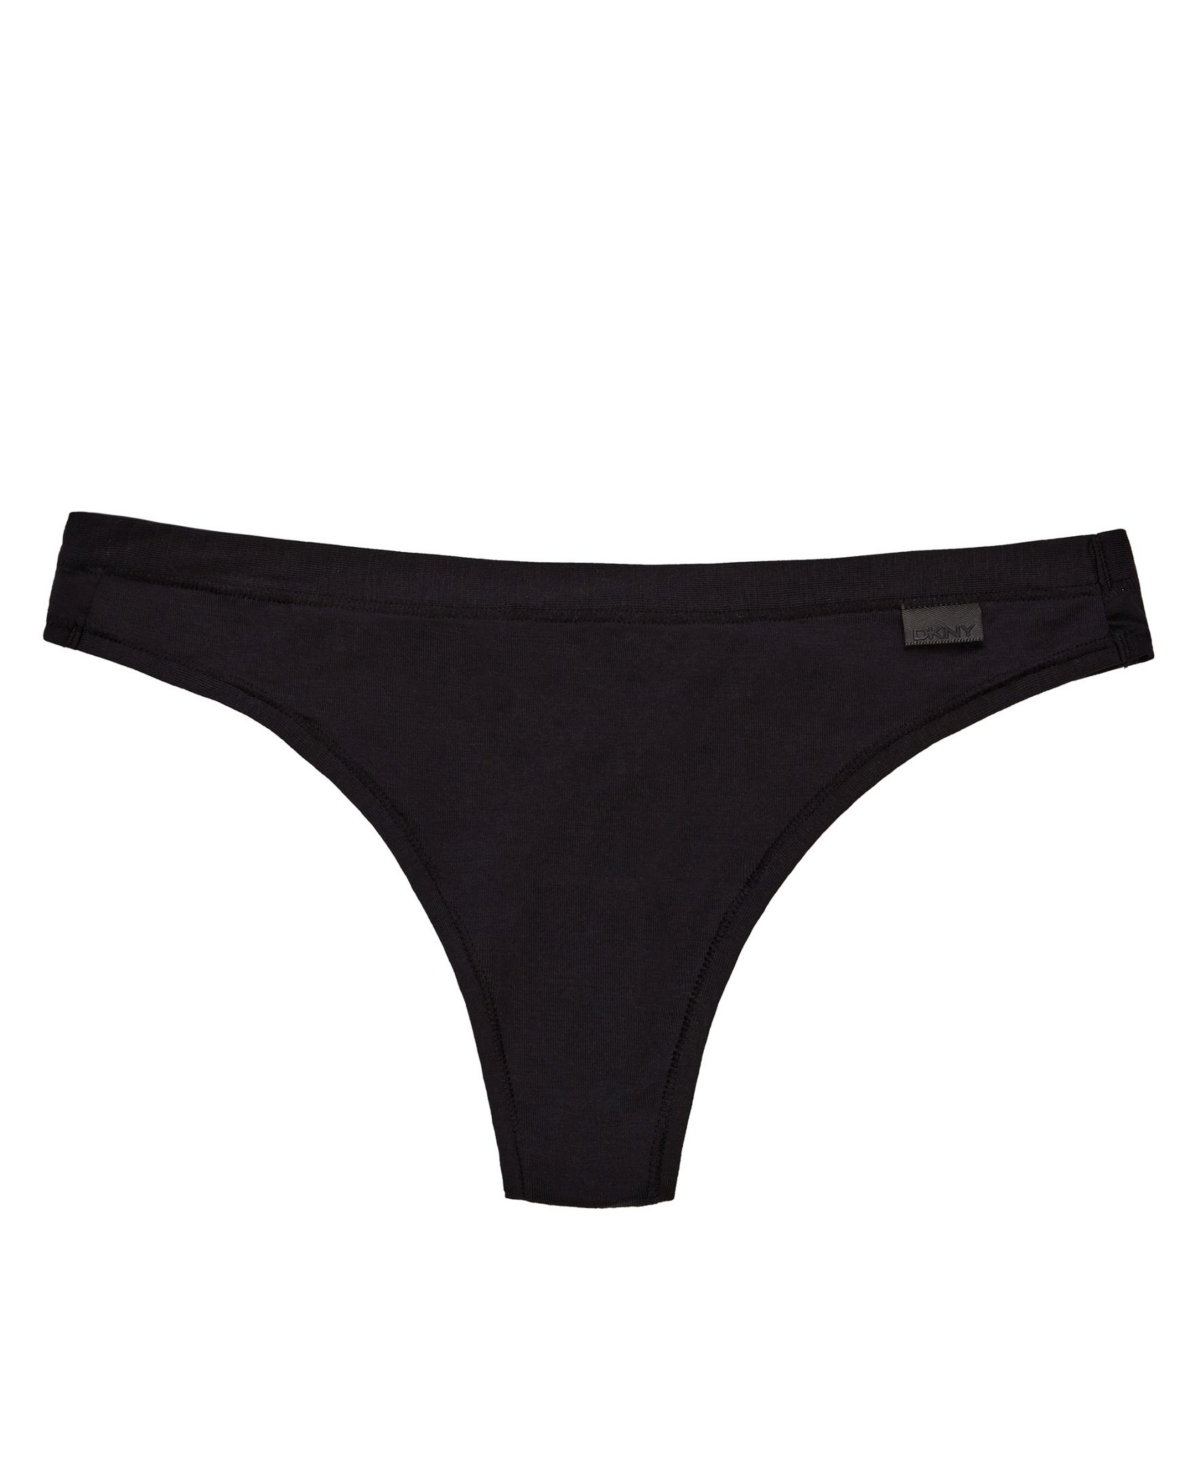 Dkny, Intimates & Sleepwear, New Dkny Black Sheer Bikini Panty L